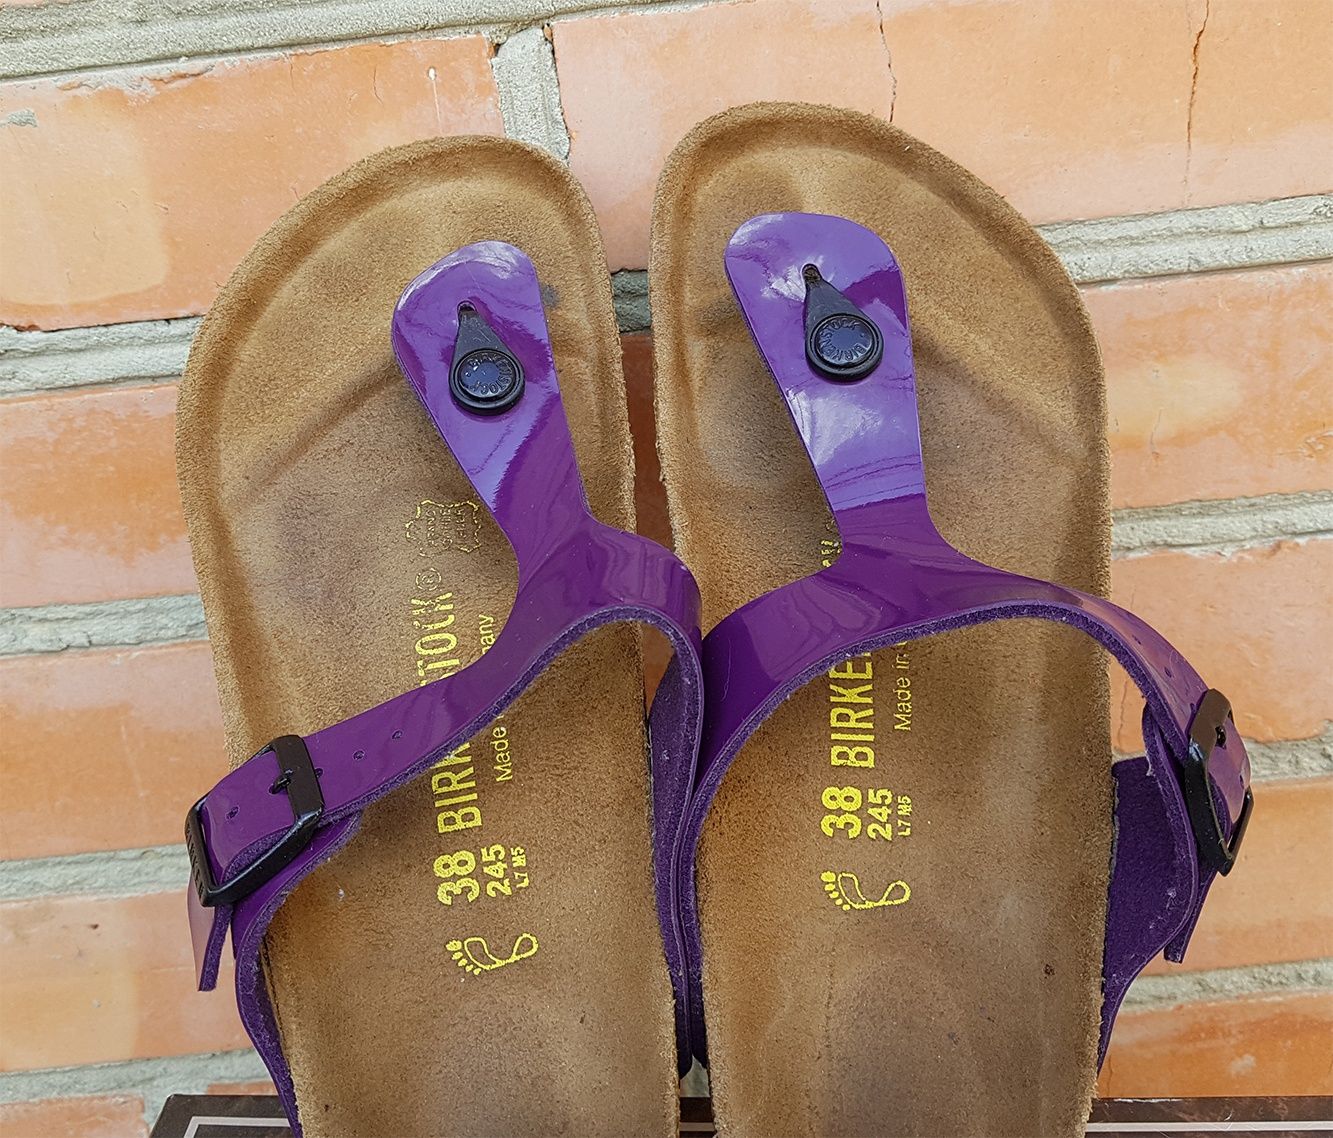 BIRKENSTOCK шлепанцы сандалии кожаные Германия ОРИГИНАЛ (38) фиолет